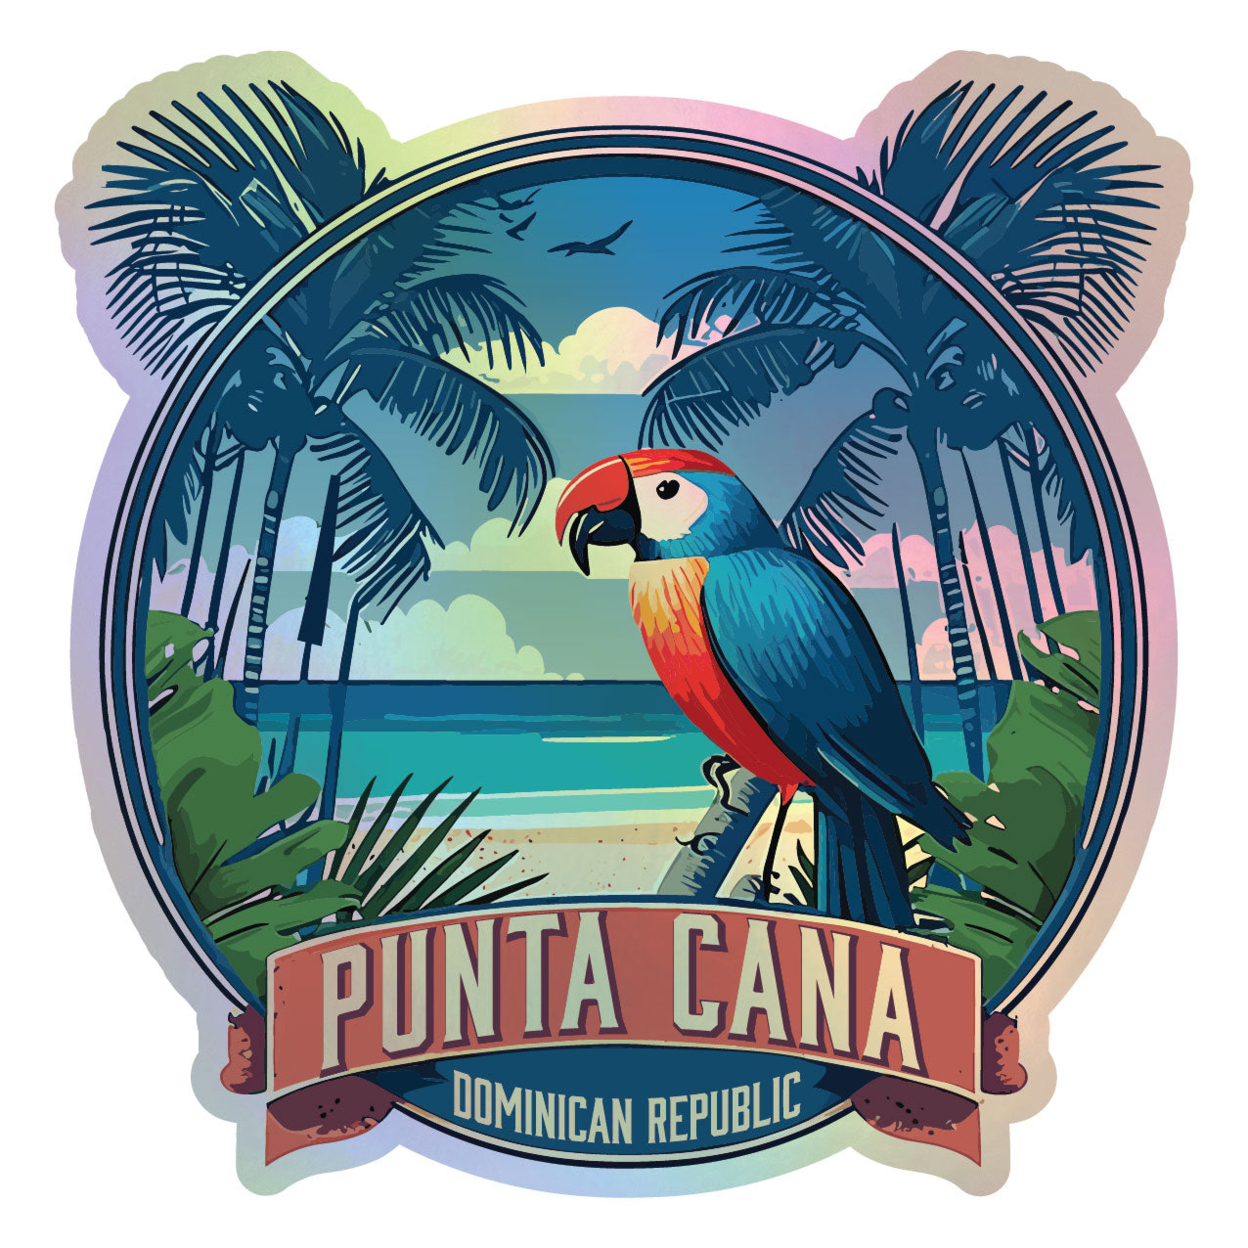 Punta Cana Dominican Republic Holographic Souvenir Vinyl Decal Sticker Parrot Design - 2 Inch